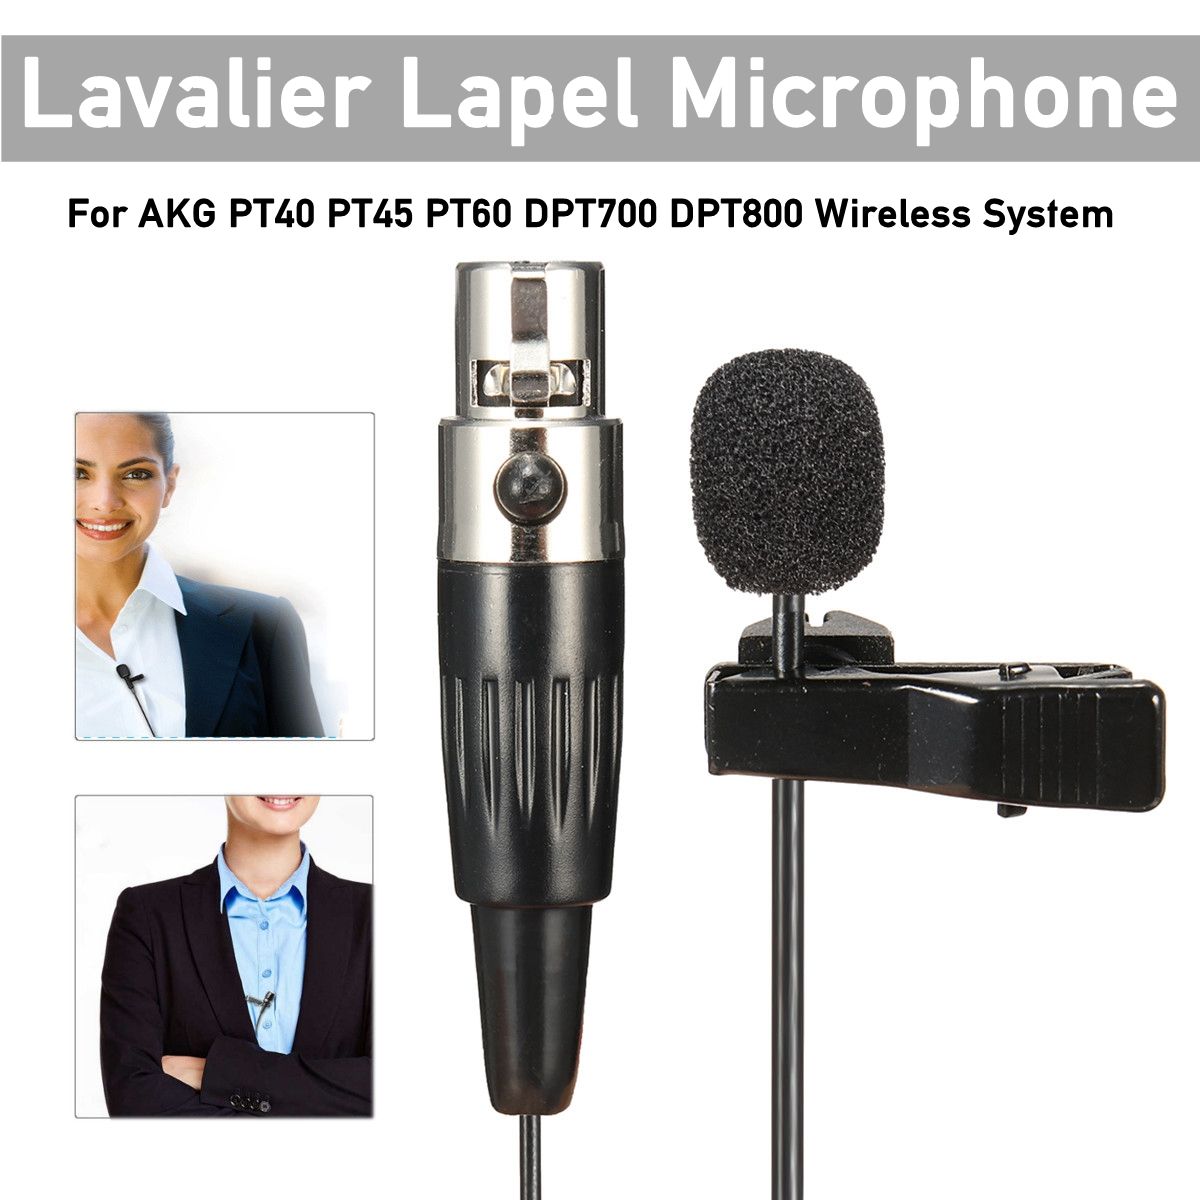 Lavalier-Lapel-Microphone-For-AKG-PT40-PT45-PT60-DPT700-DPT800-Wireless-System-For-Teaching-Speach-1401123